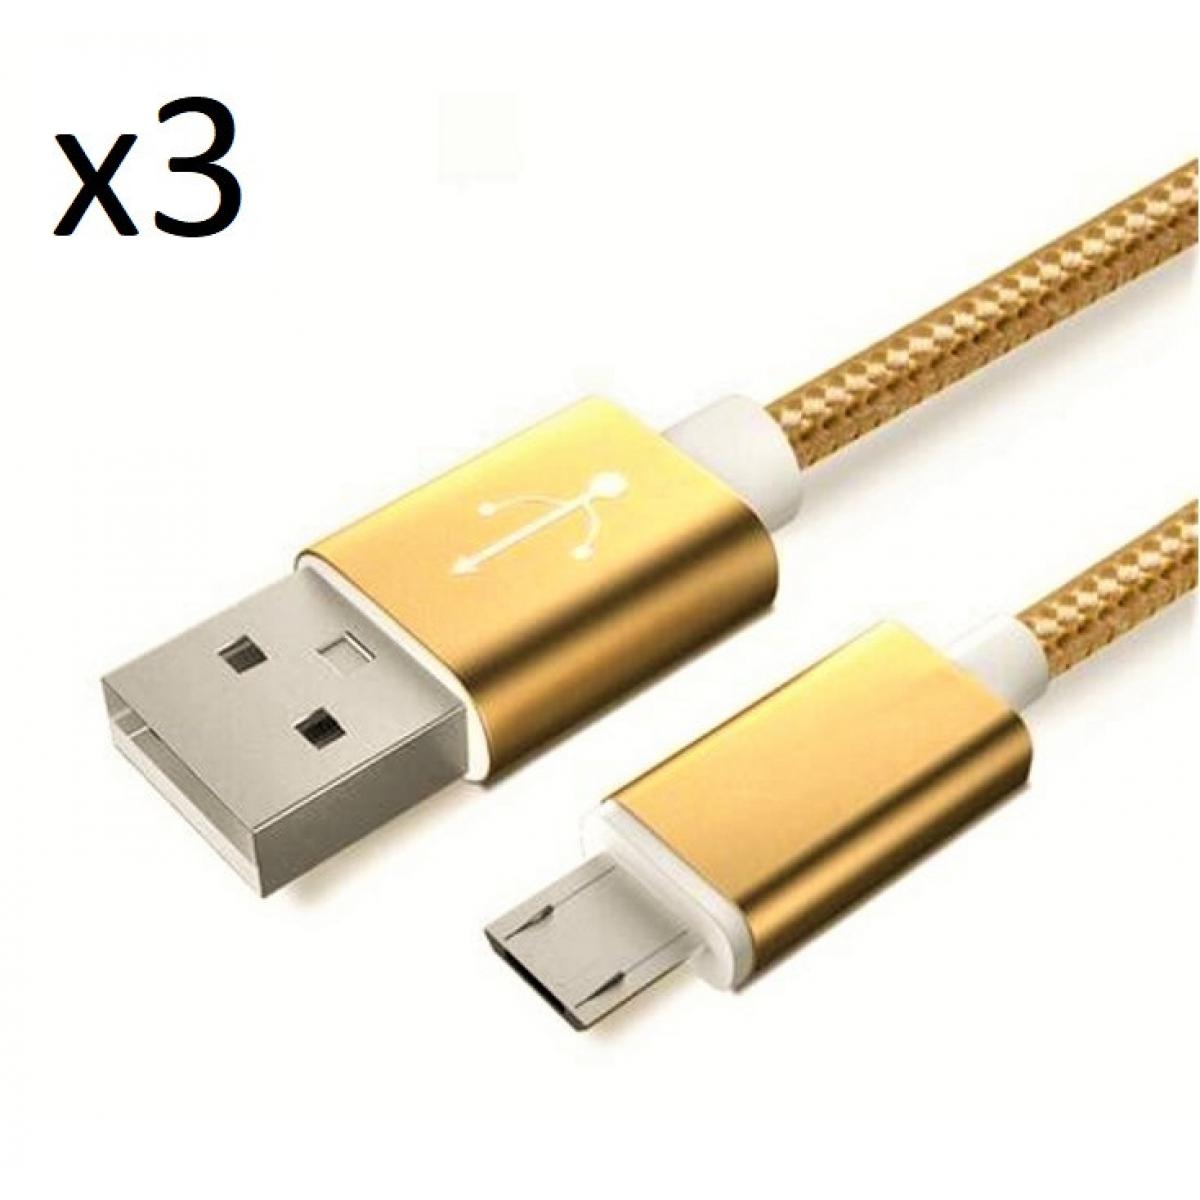 Shot - Pack de 3 Cables Metal Nylon Micro USB pour HUAWEI Y6 2019 Smartphone Android Chargeur (OR) - Chargeur secteur téléphone